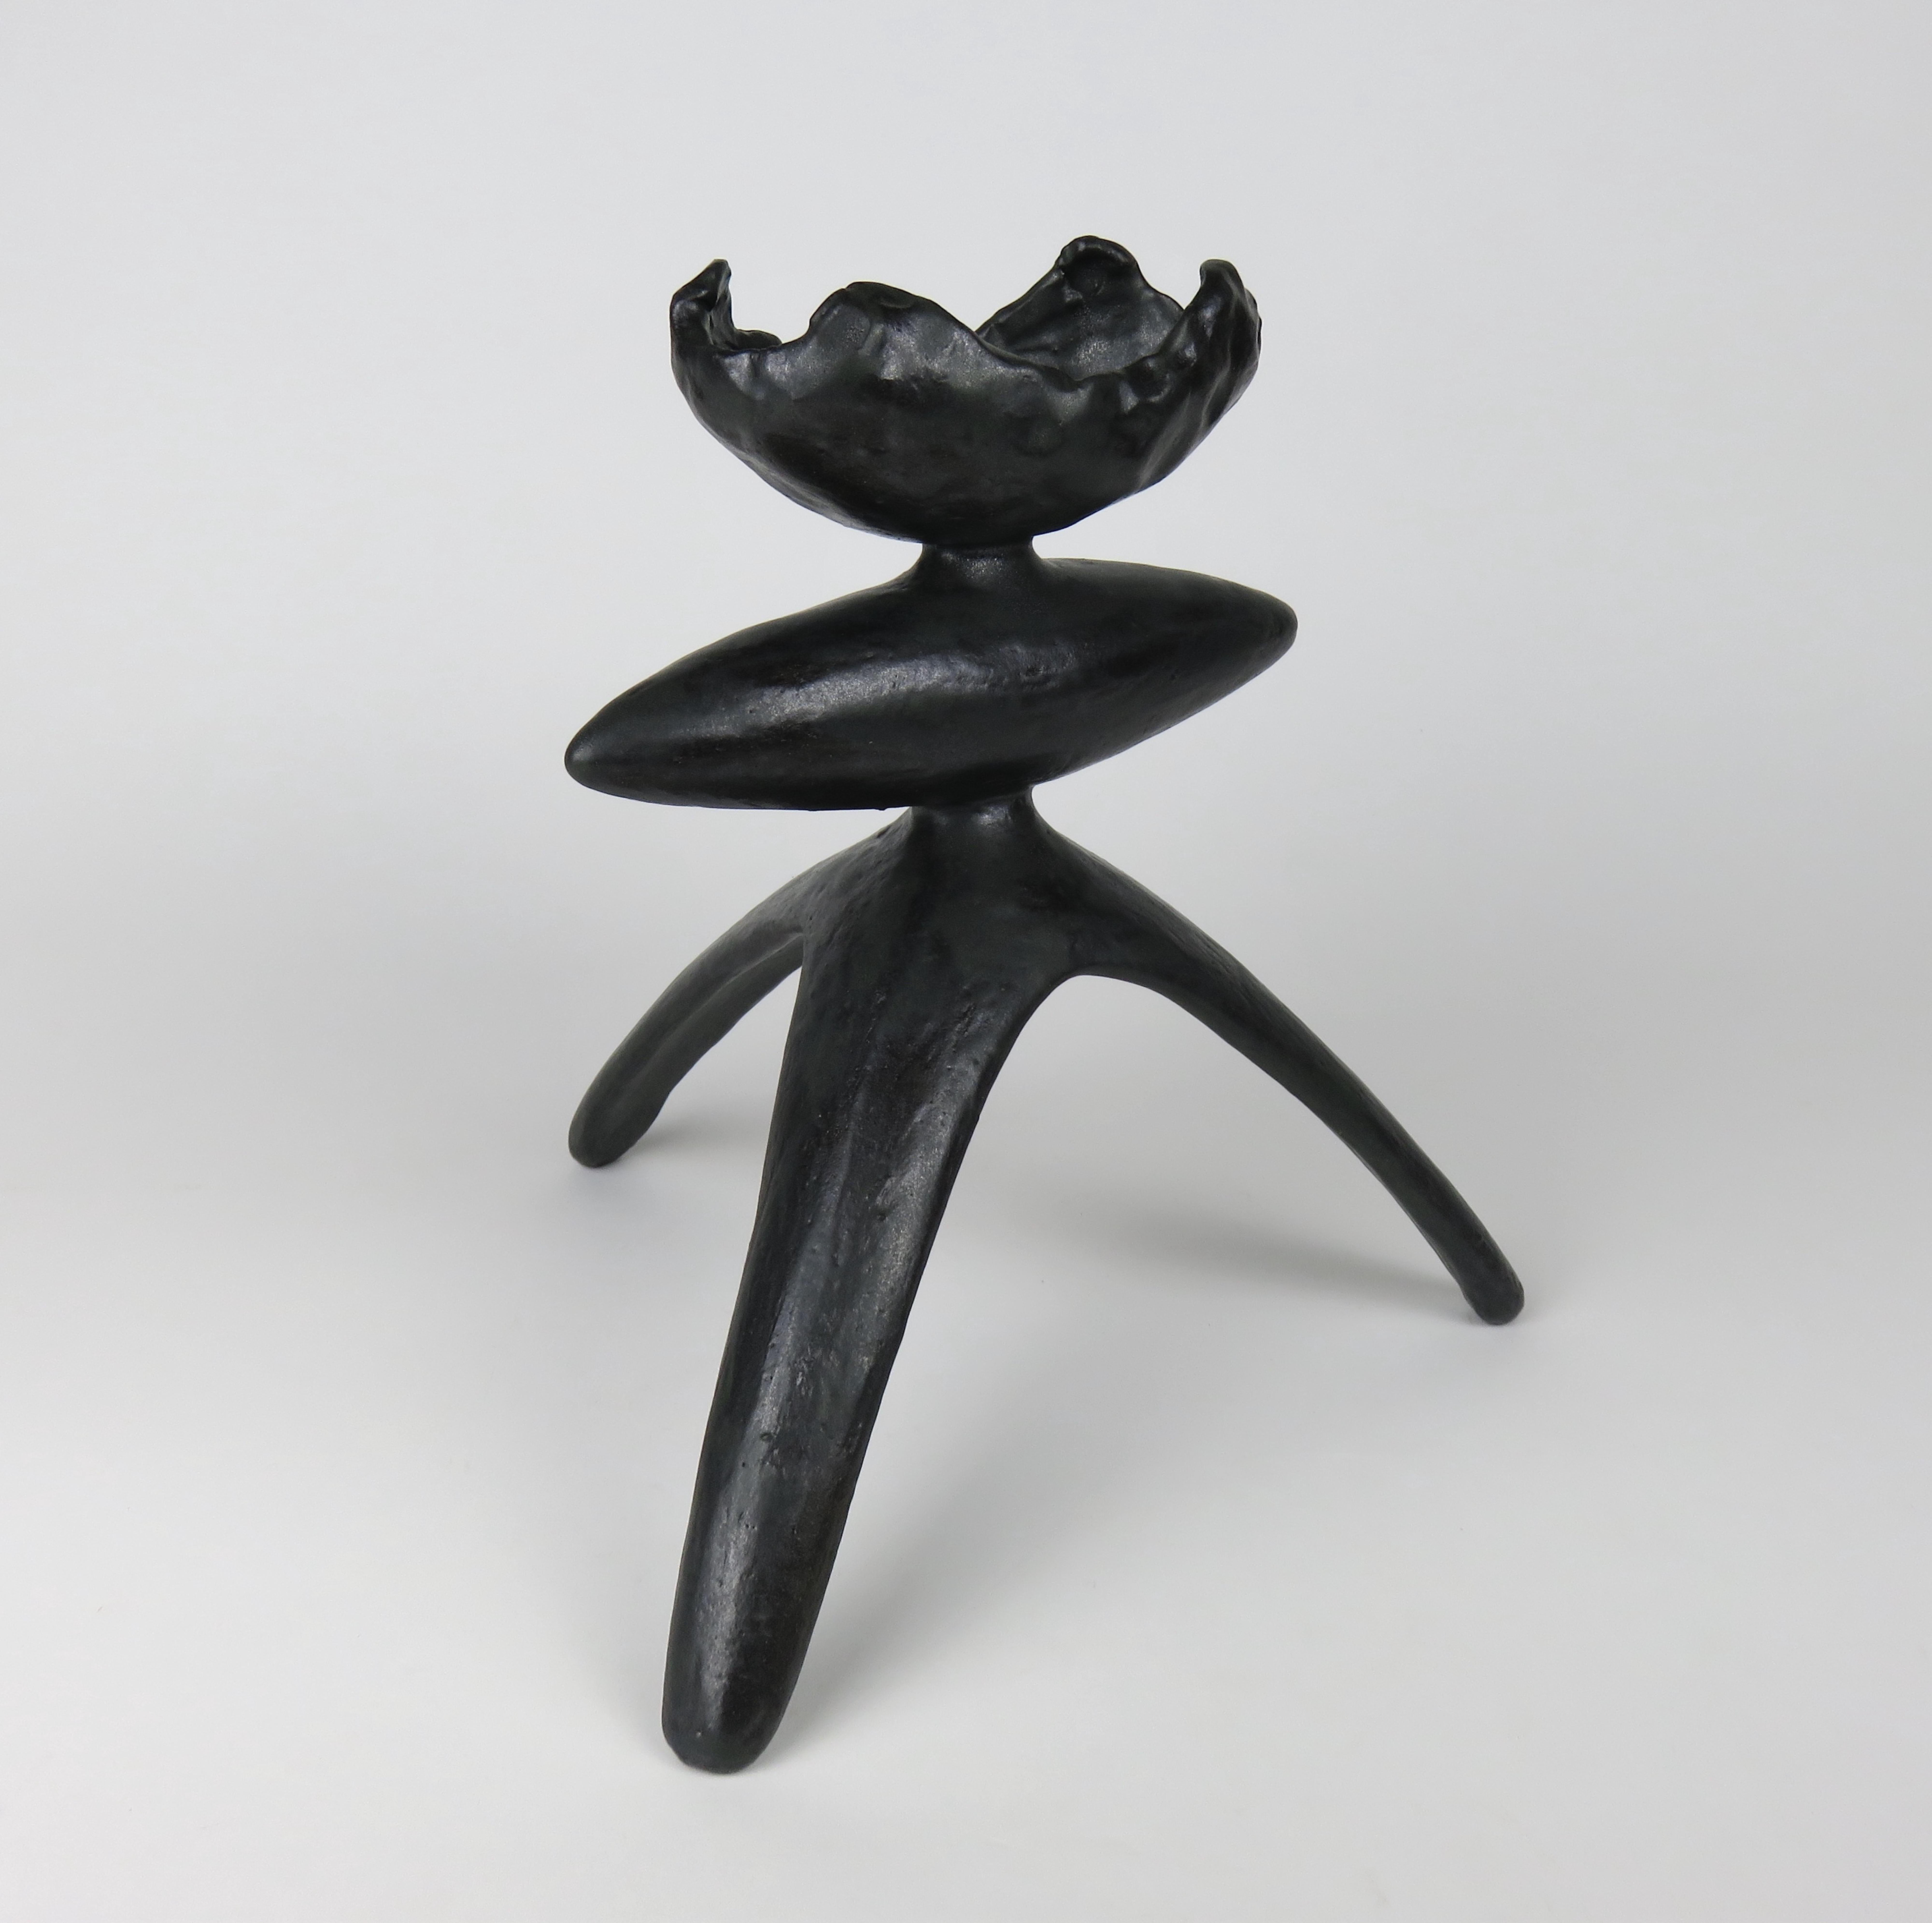 Glazed Open Crimped Curve Top, Elongated Center, Tripod Legs, Black Ceramic TOTEM For Sale